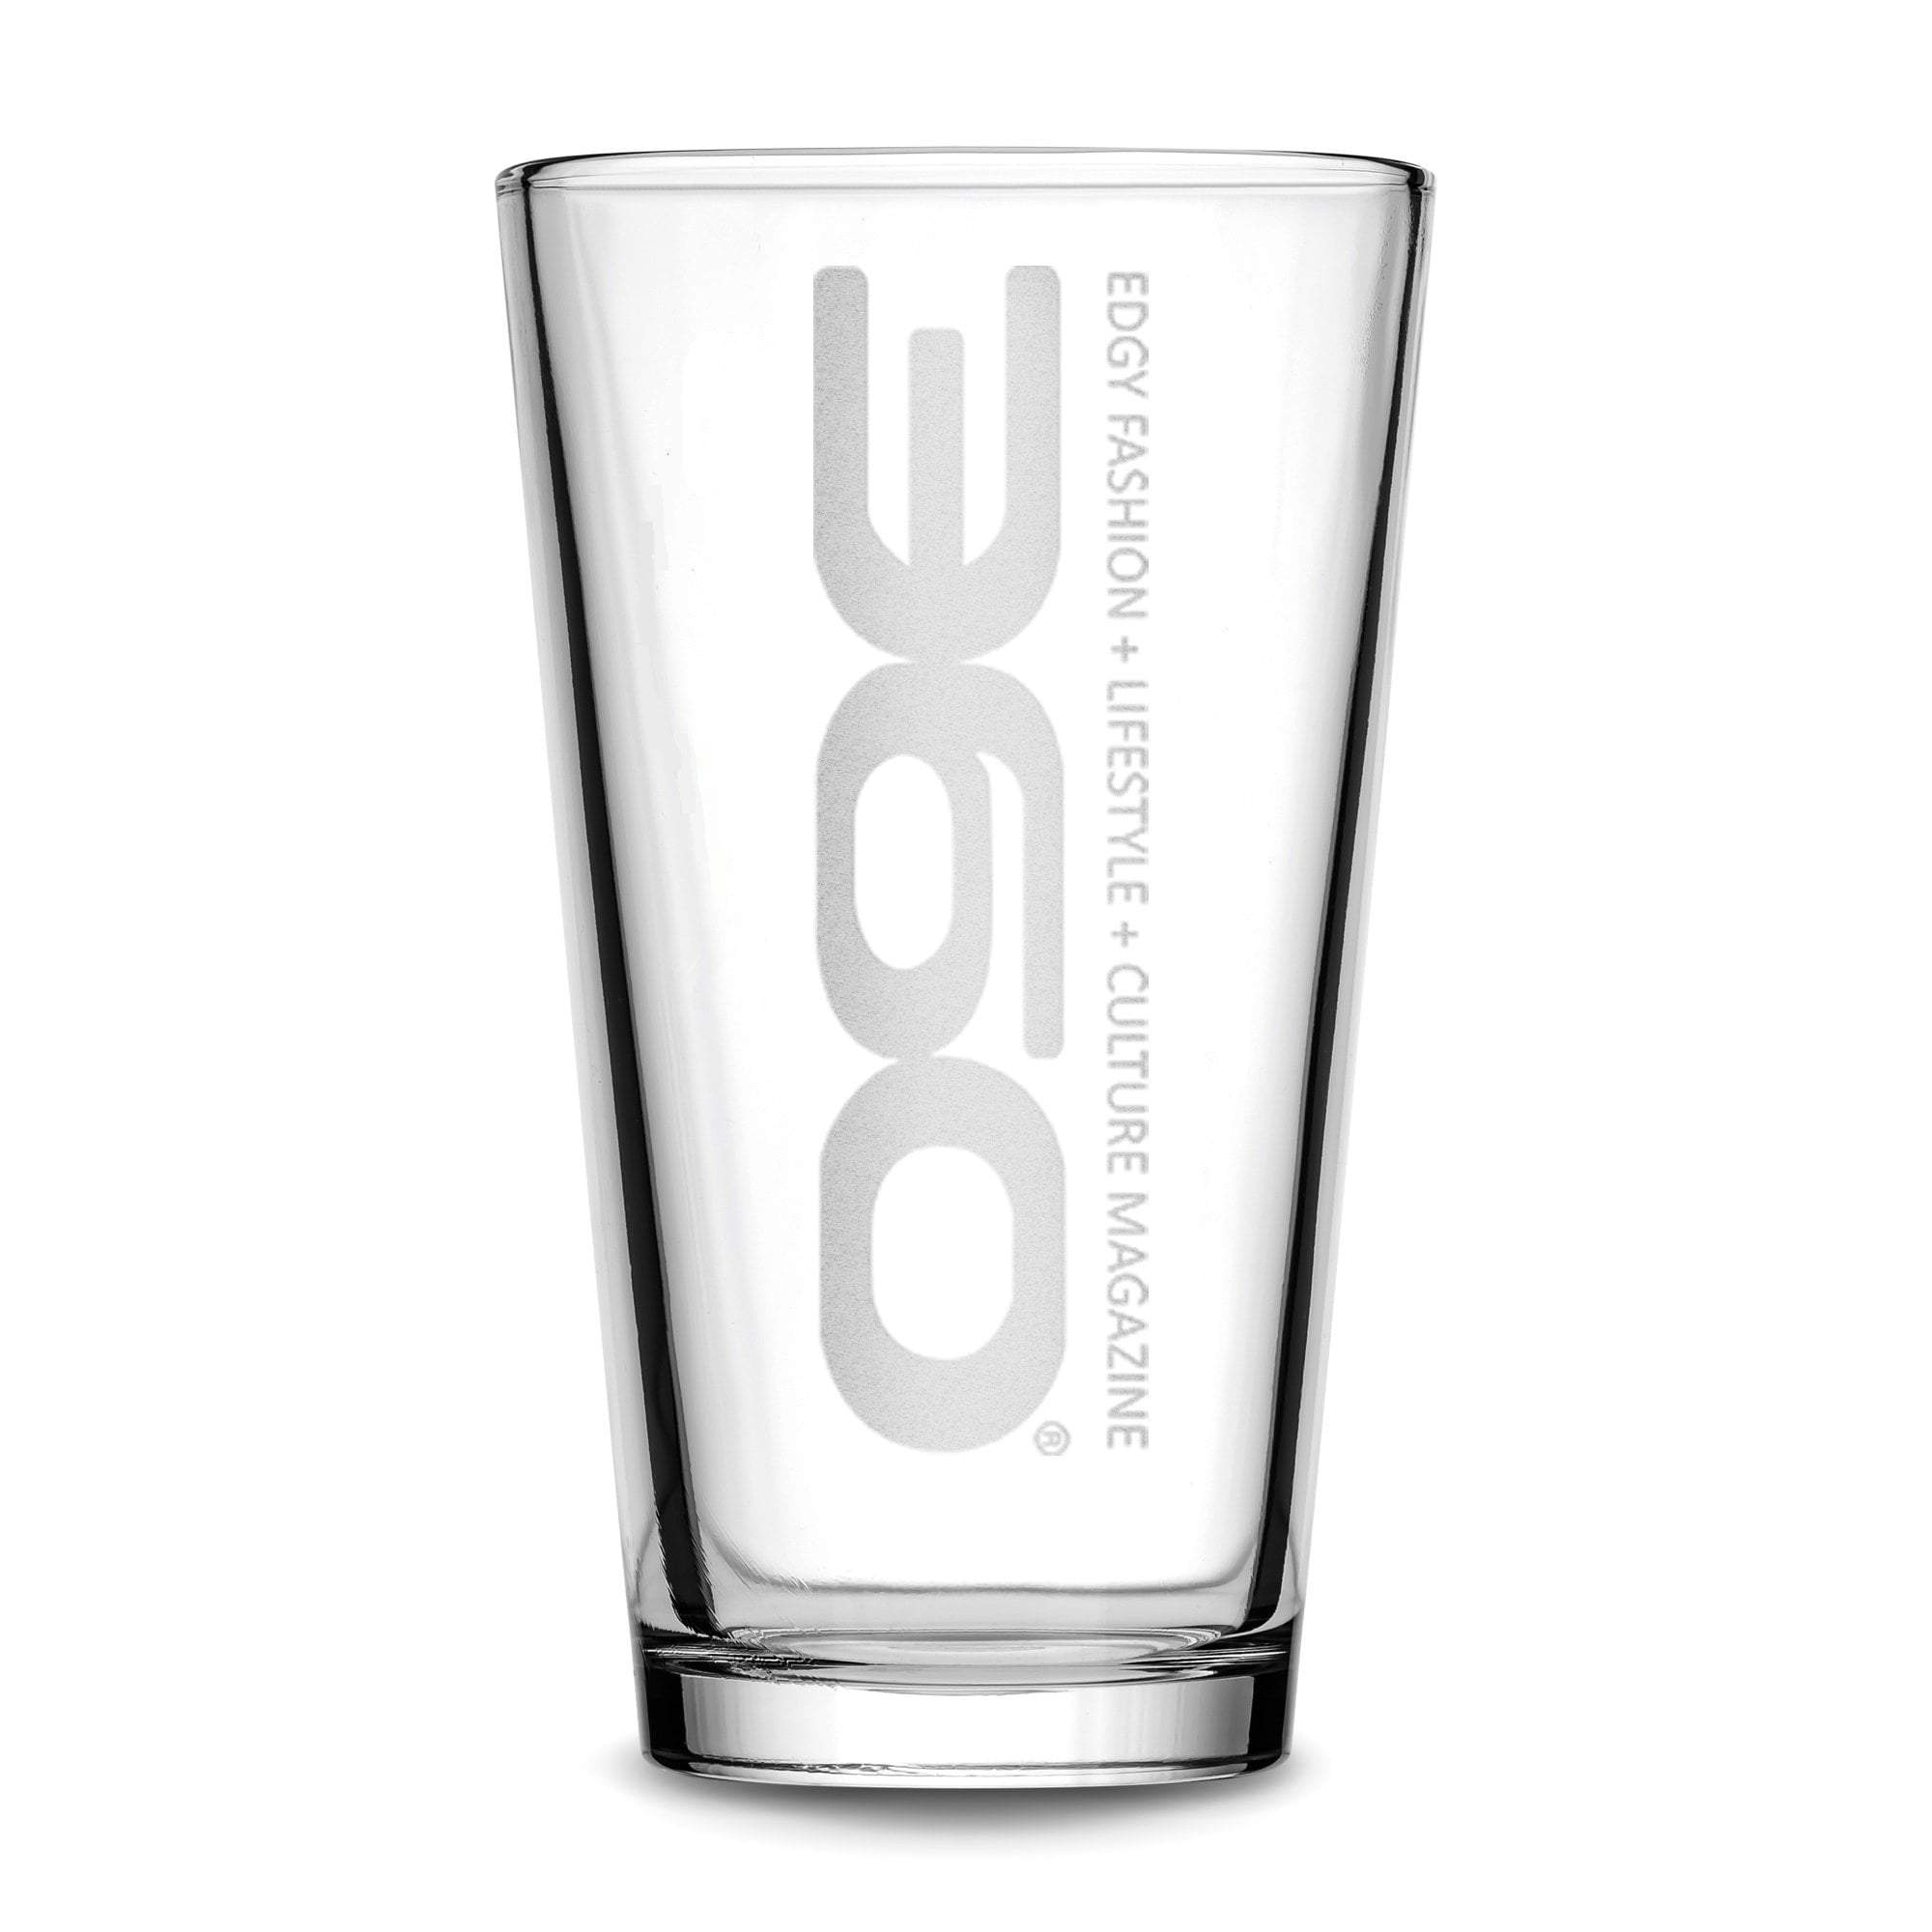 360 Magazine Pint Glass, Beer Glass, 16oz Integrity Bottles